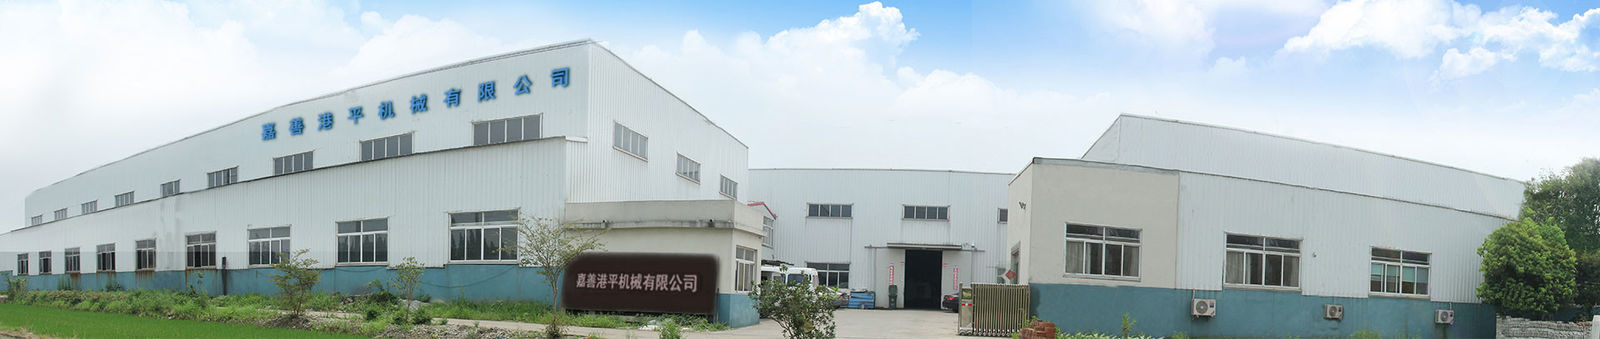 Chine Jiashan Gangping Machinery Co., Ltd. Profil de la société